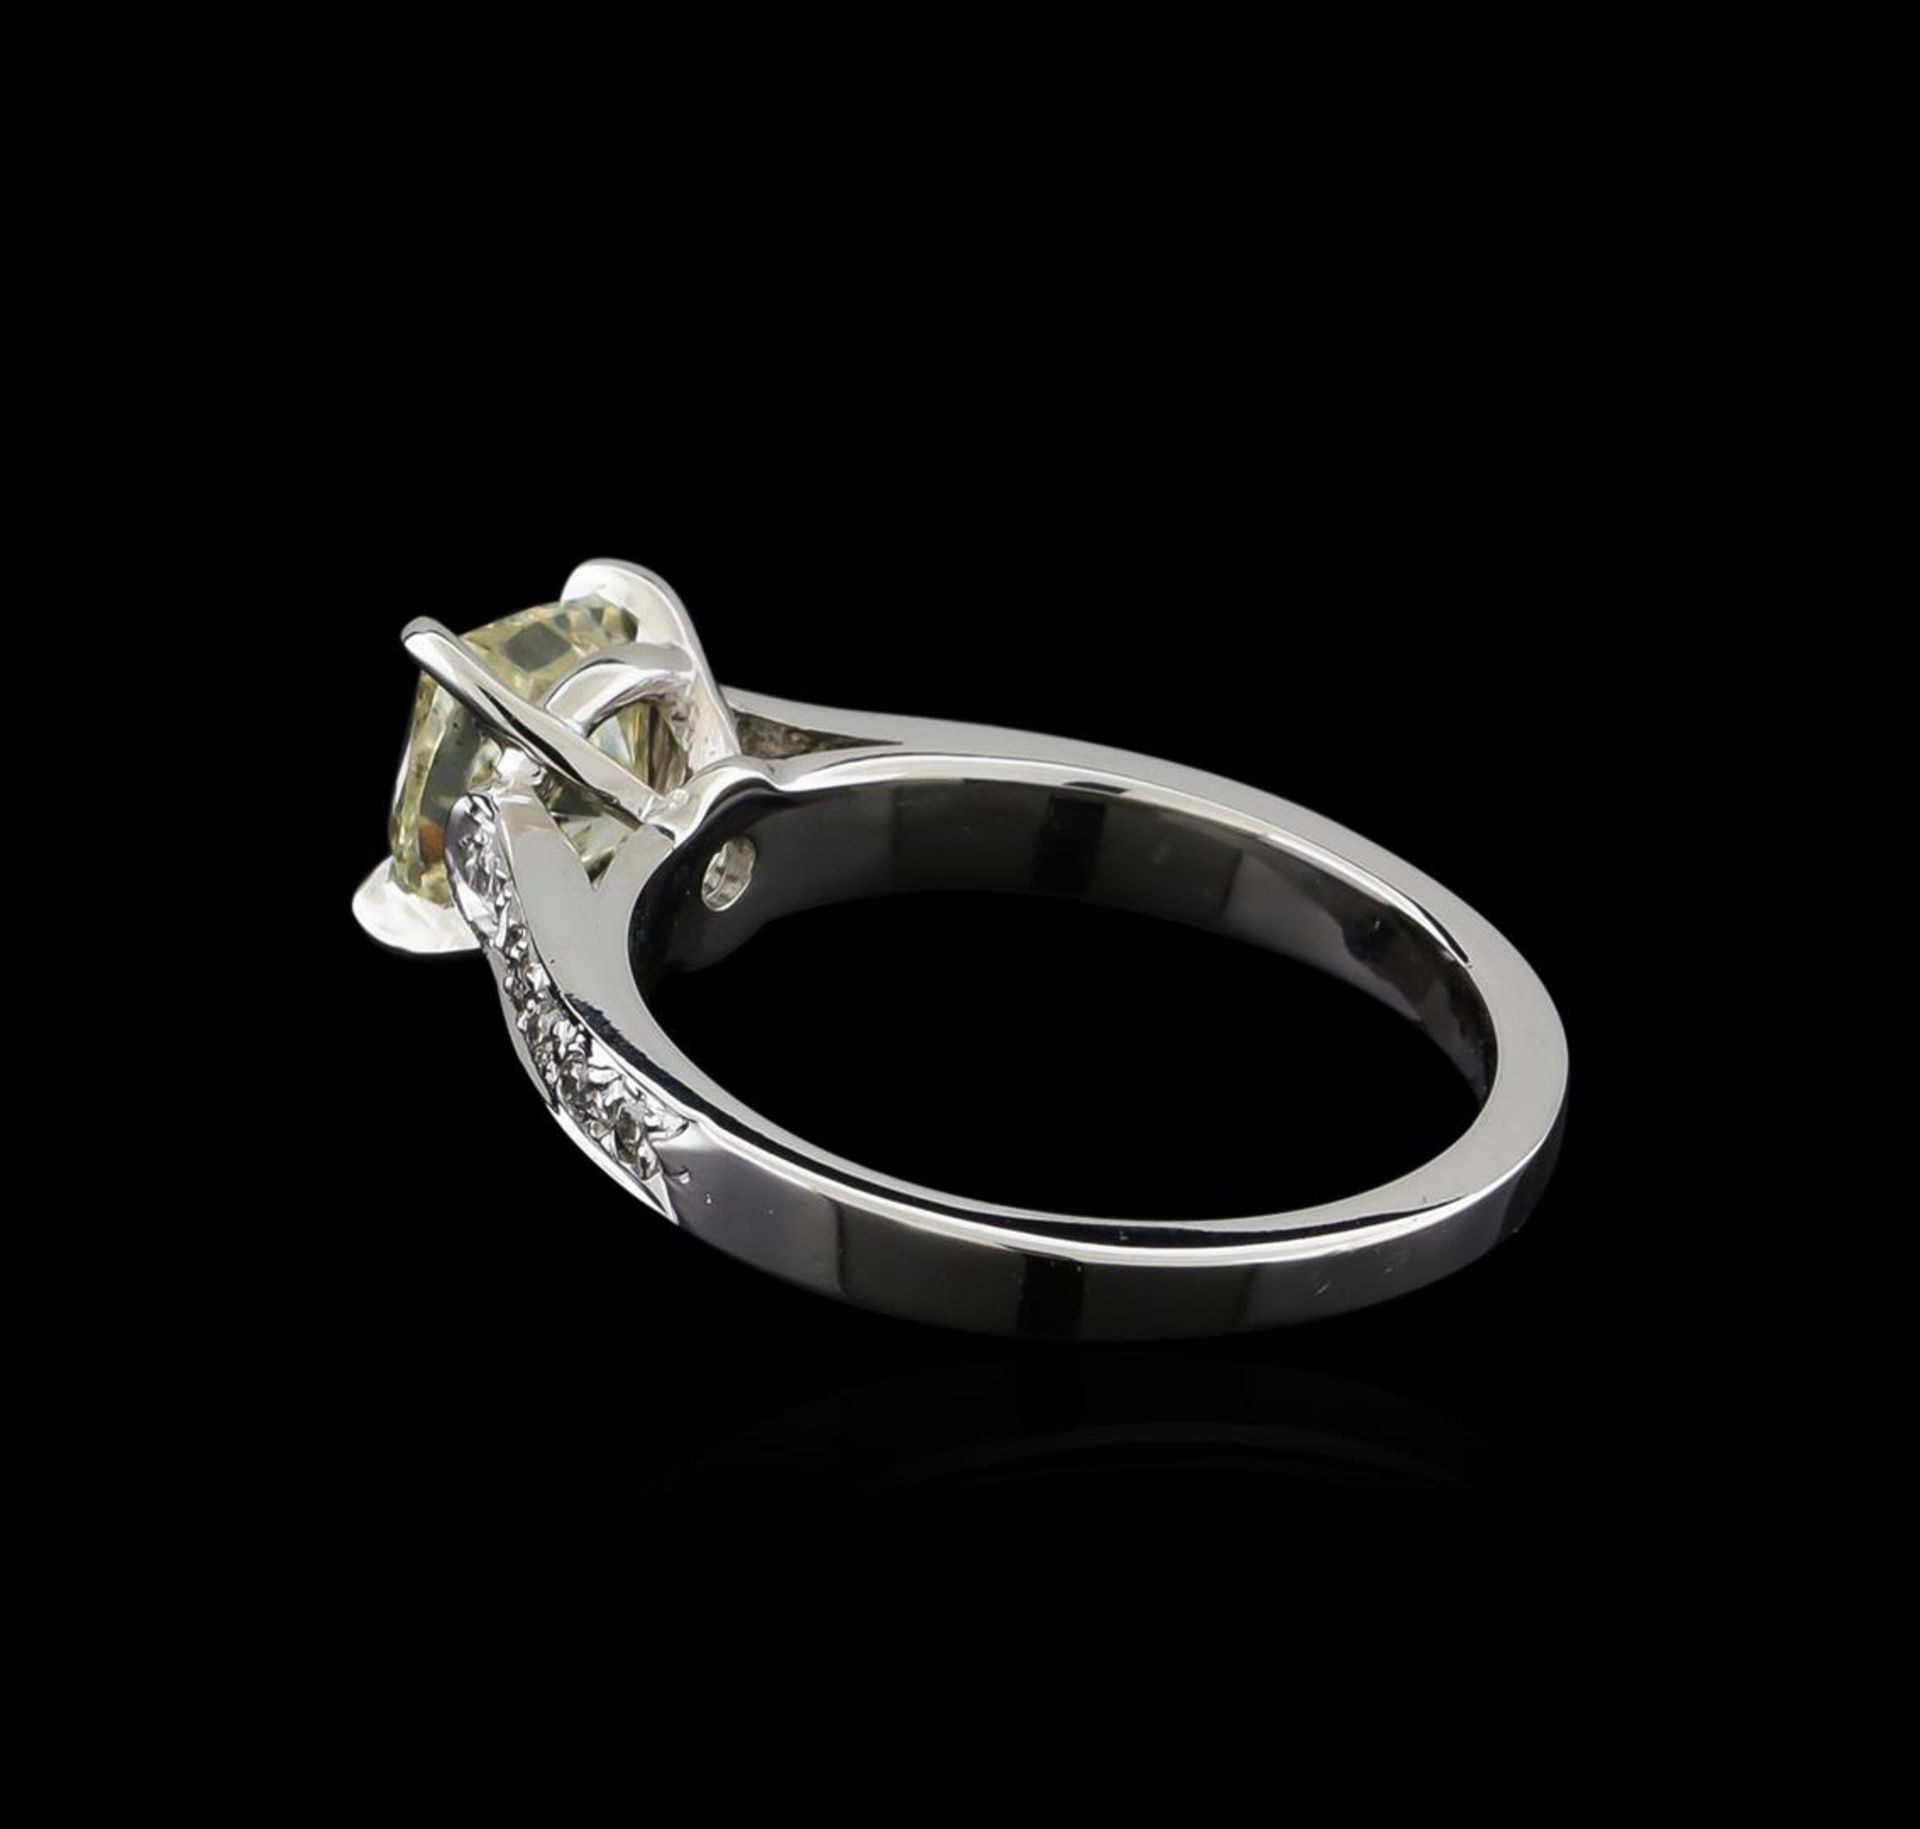 1.77 ctw Diamond Ring - 14KT White Gold - Image 3 of 5